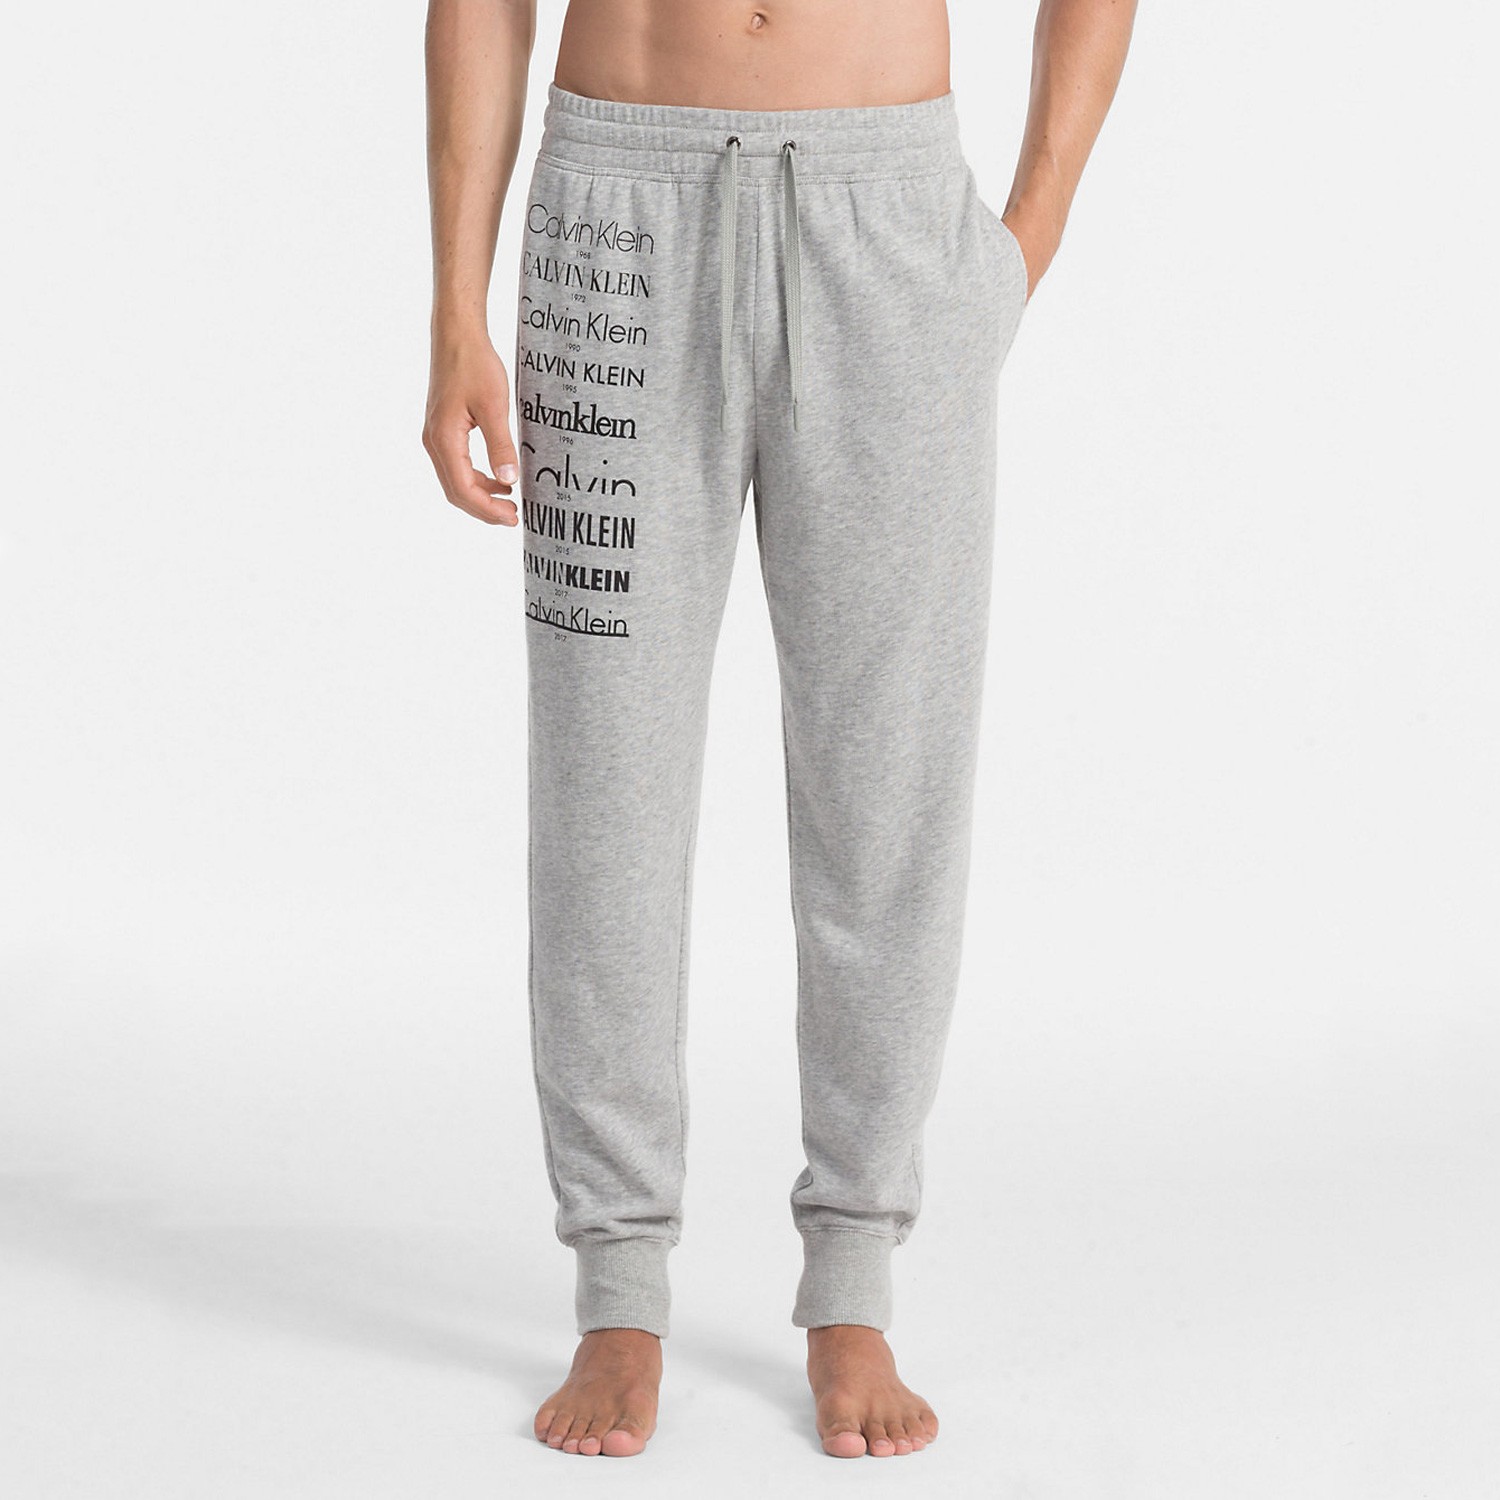 Jogging pants - Heritage: Pants for man brand Calvin Klein for sale